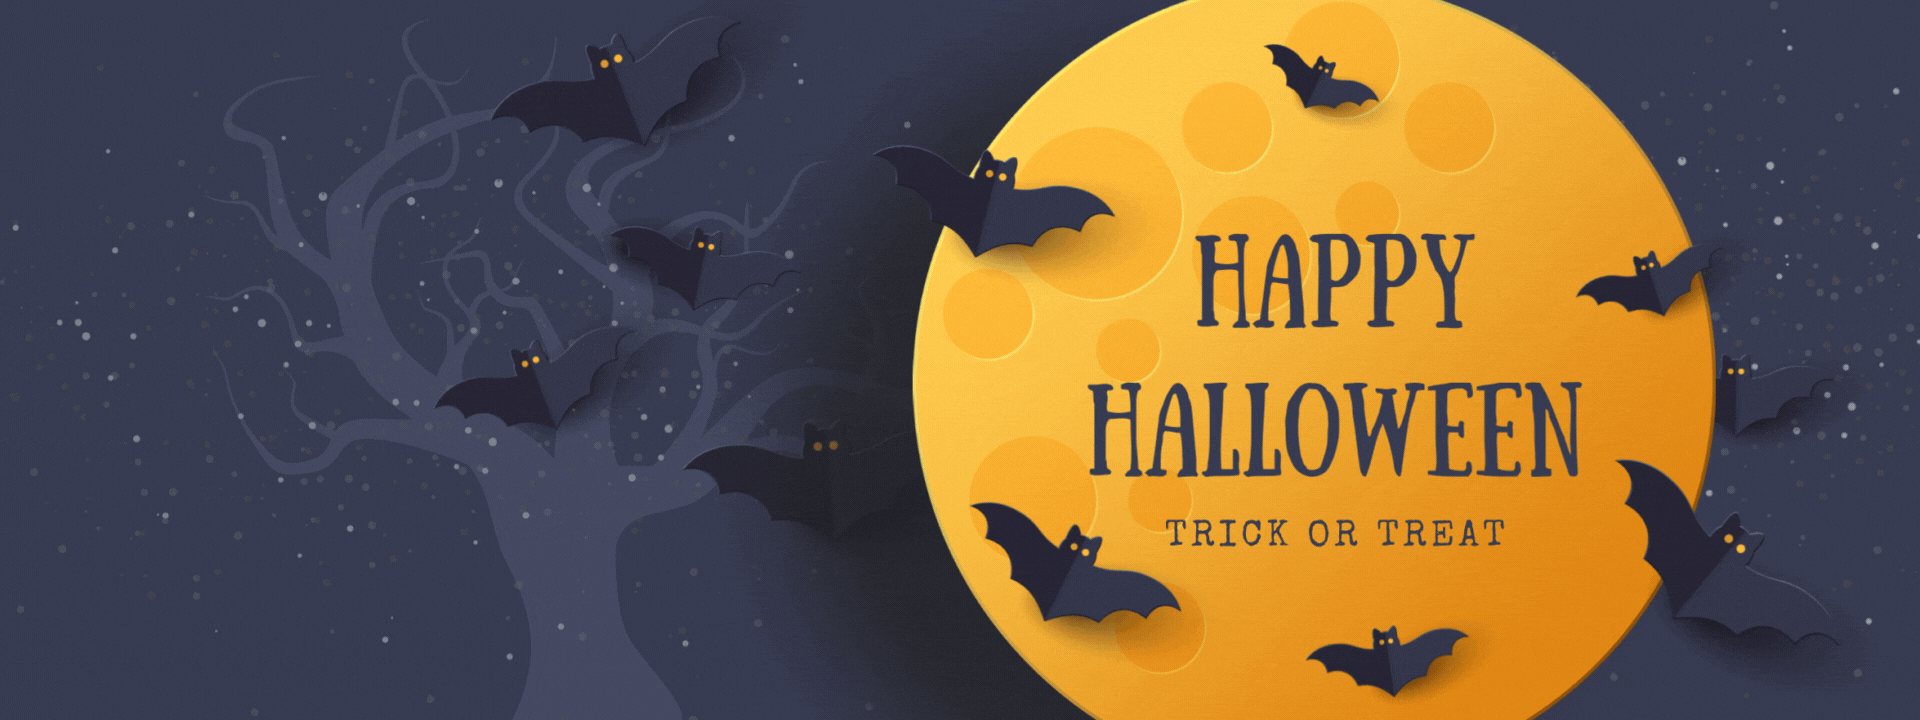 Happy Halloween - Trick or Treat